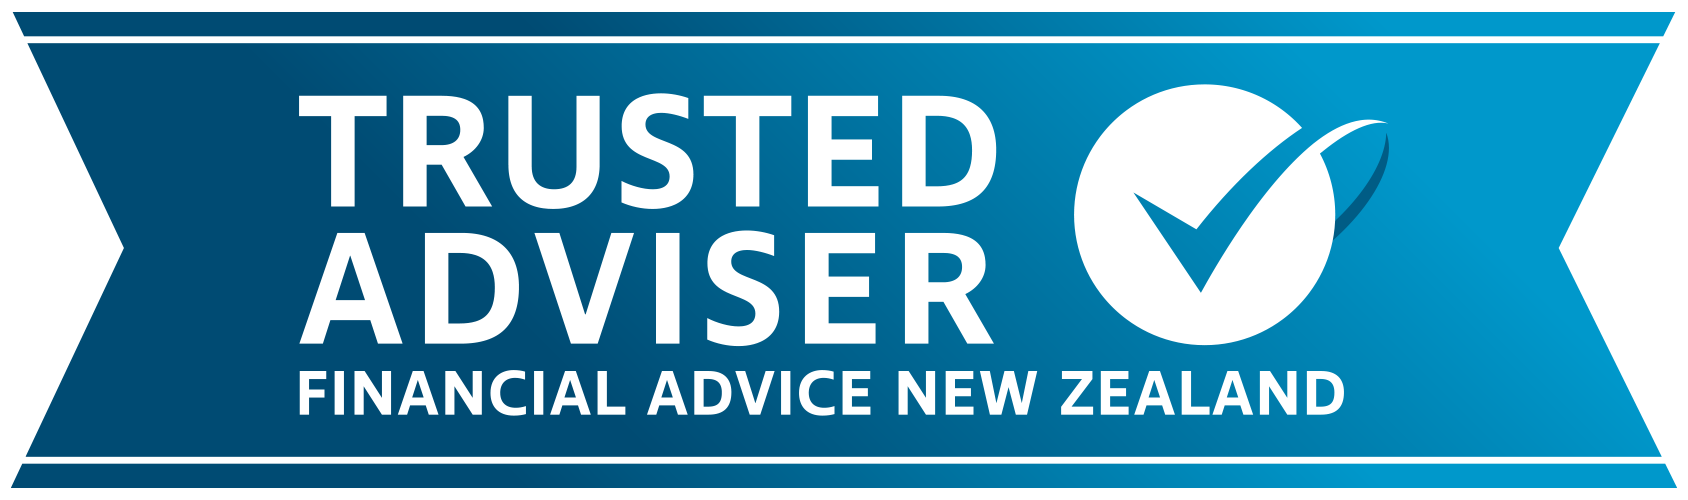 Trusteda Adviser - Financial Advice New Zealand